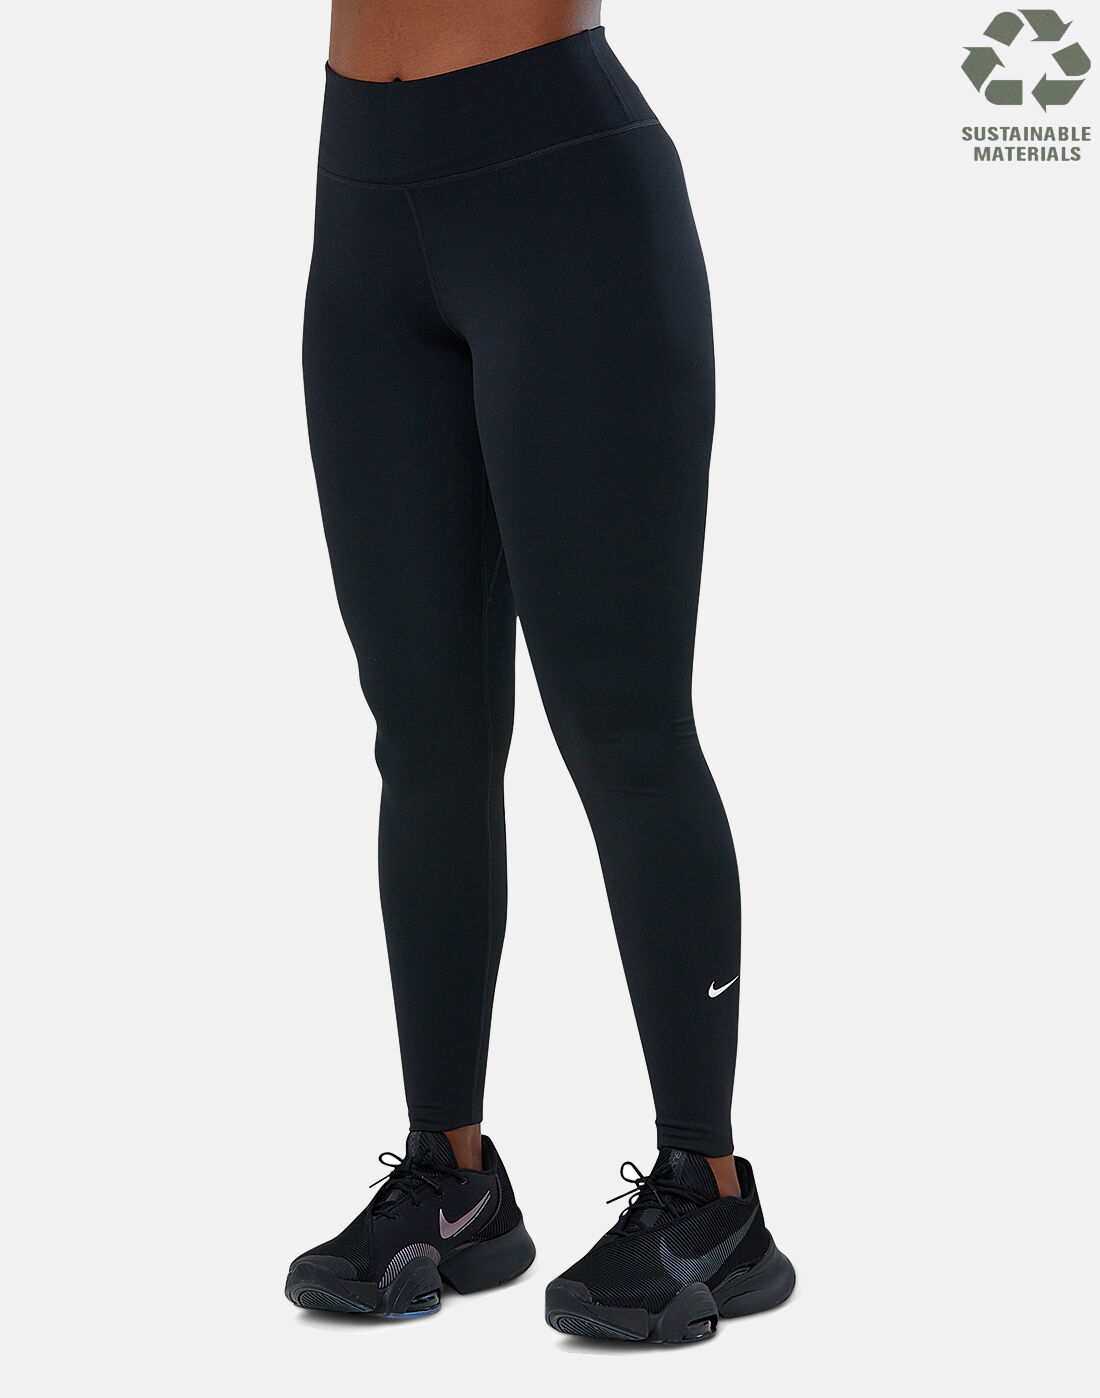 Nike Women's Pro Tight (Black/White, X-Small) : Amazon.in: Clothing &  Accessories